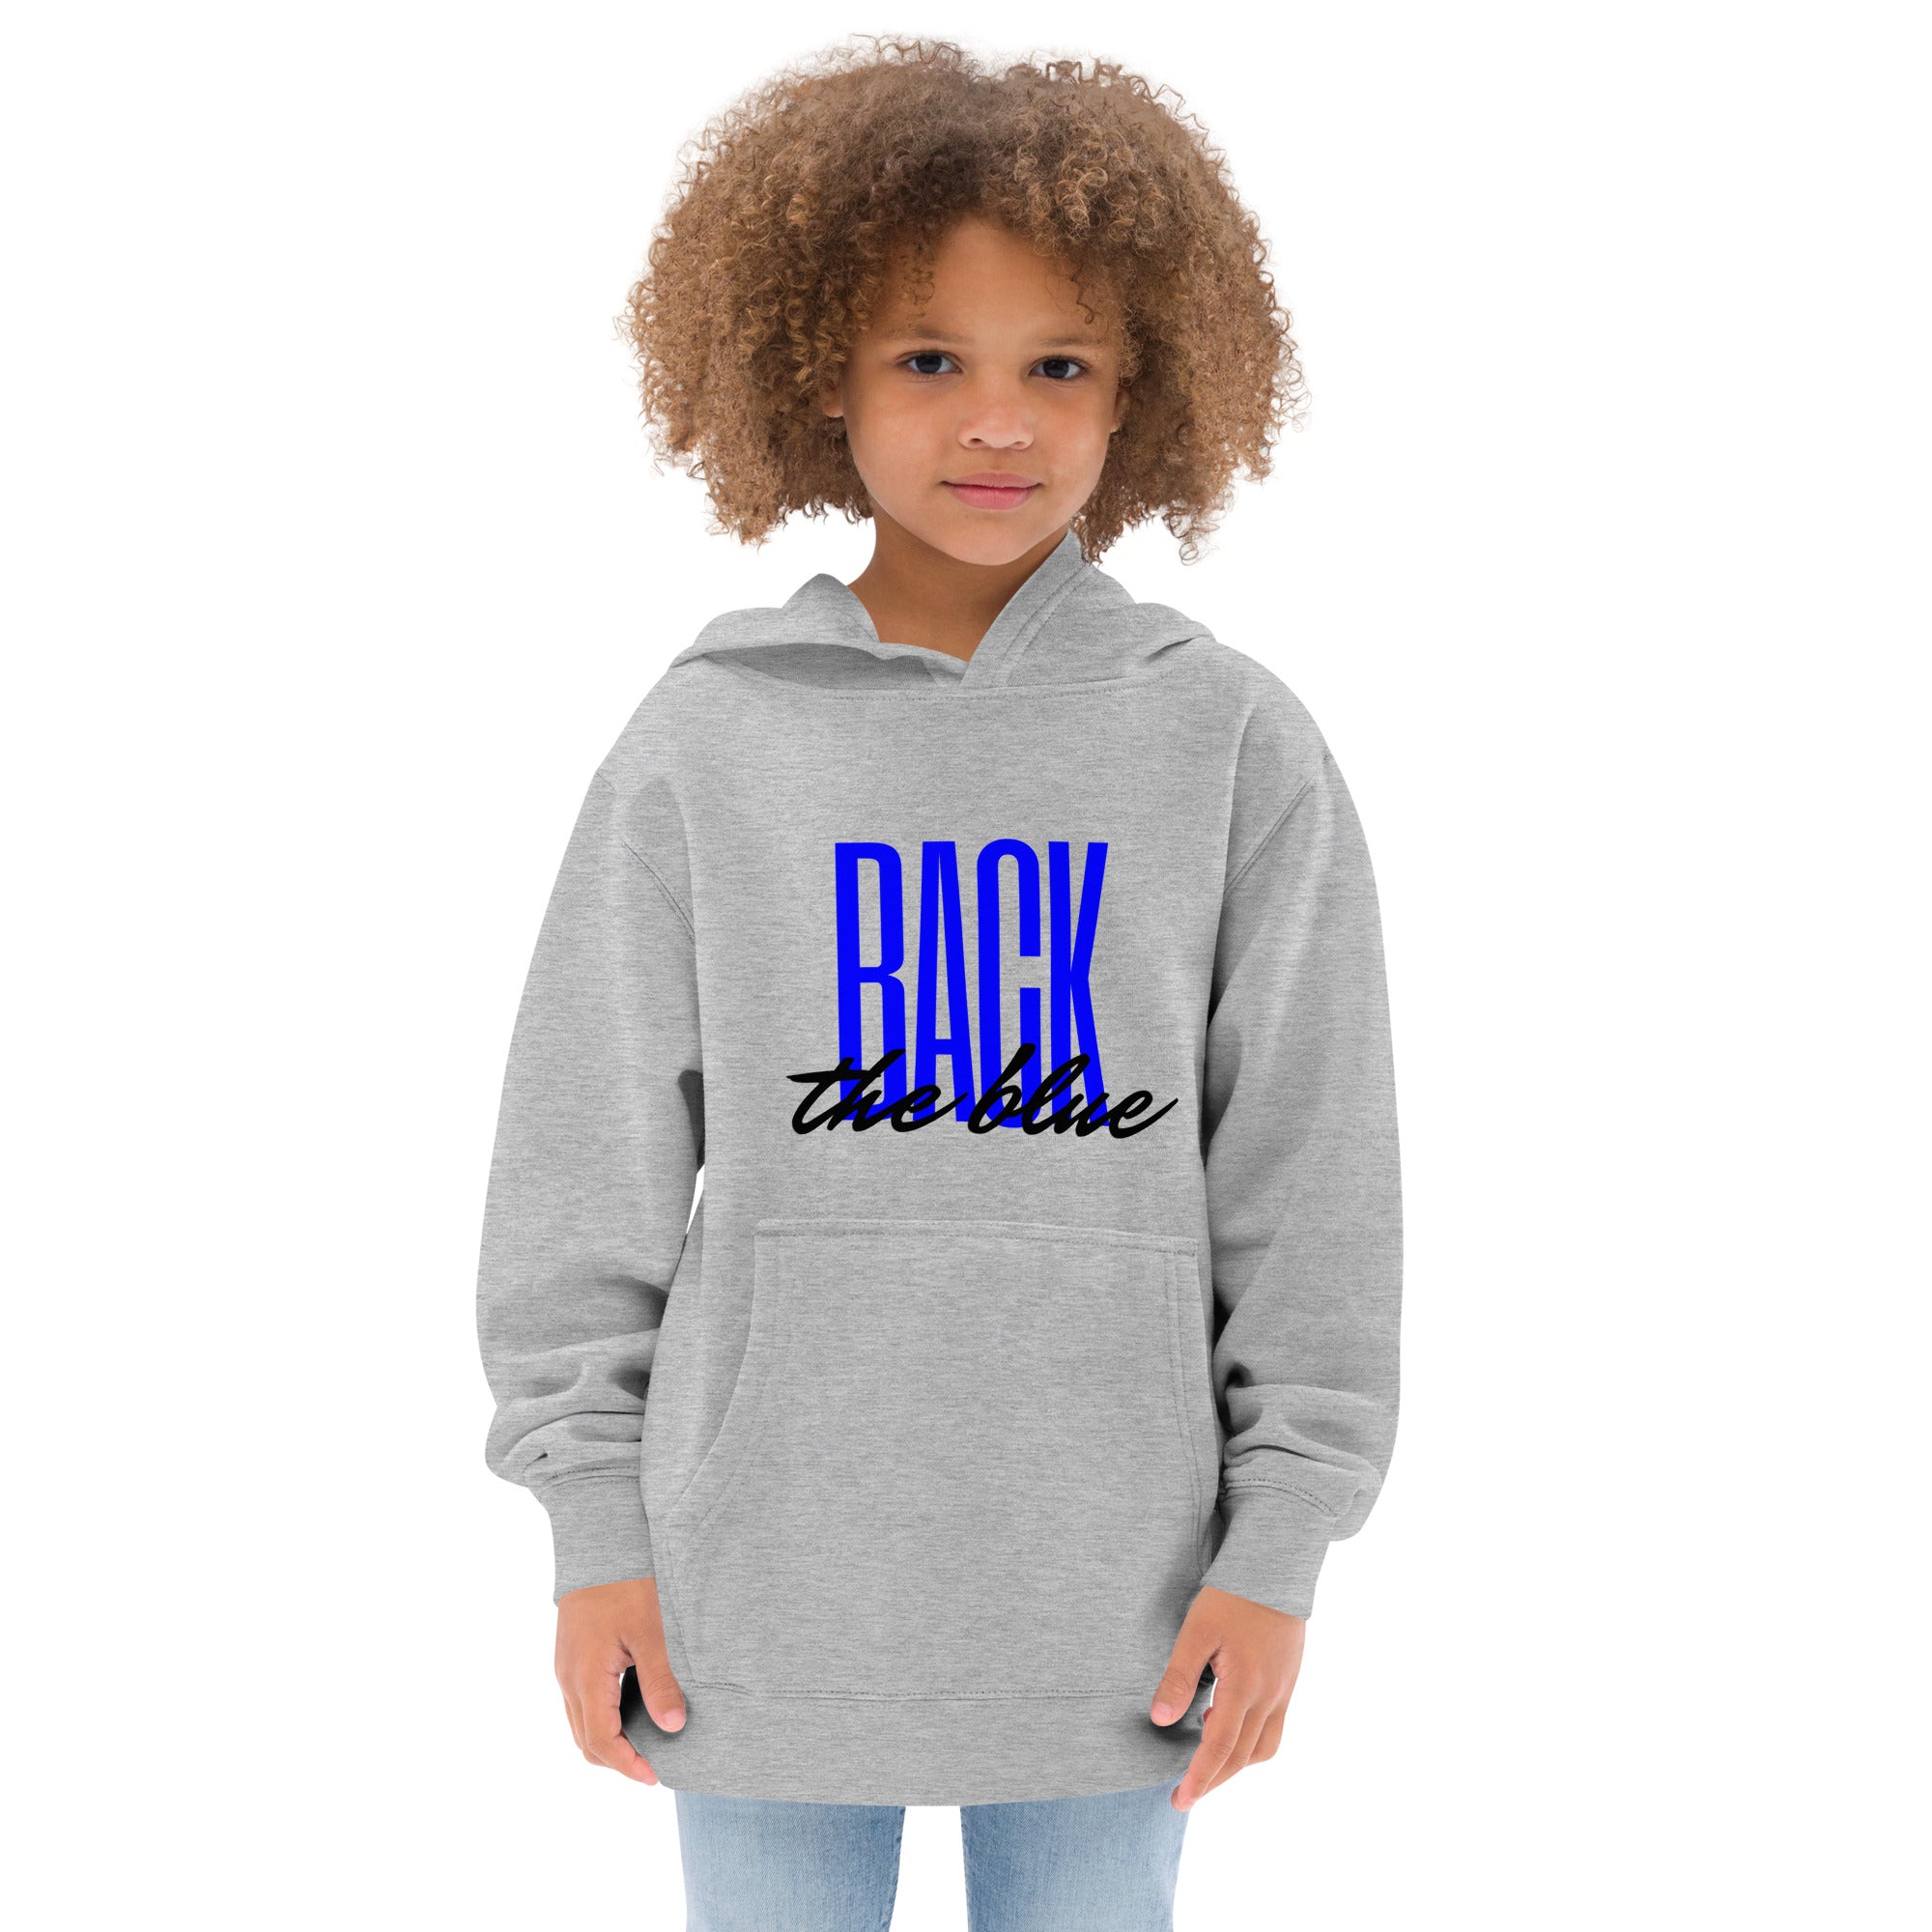 Back the Blue Kids fleece hoodie